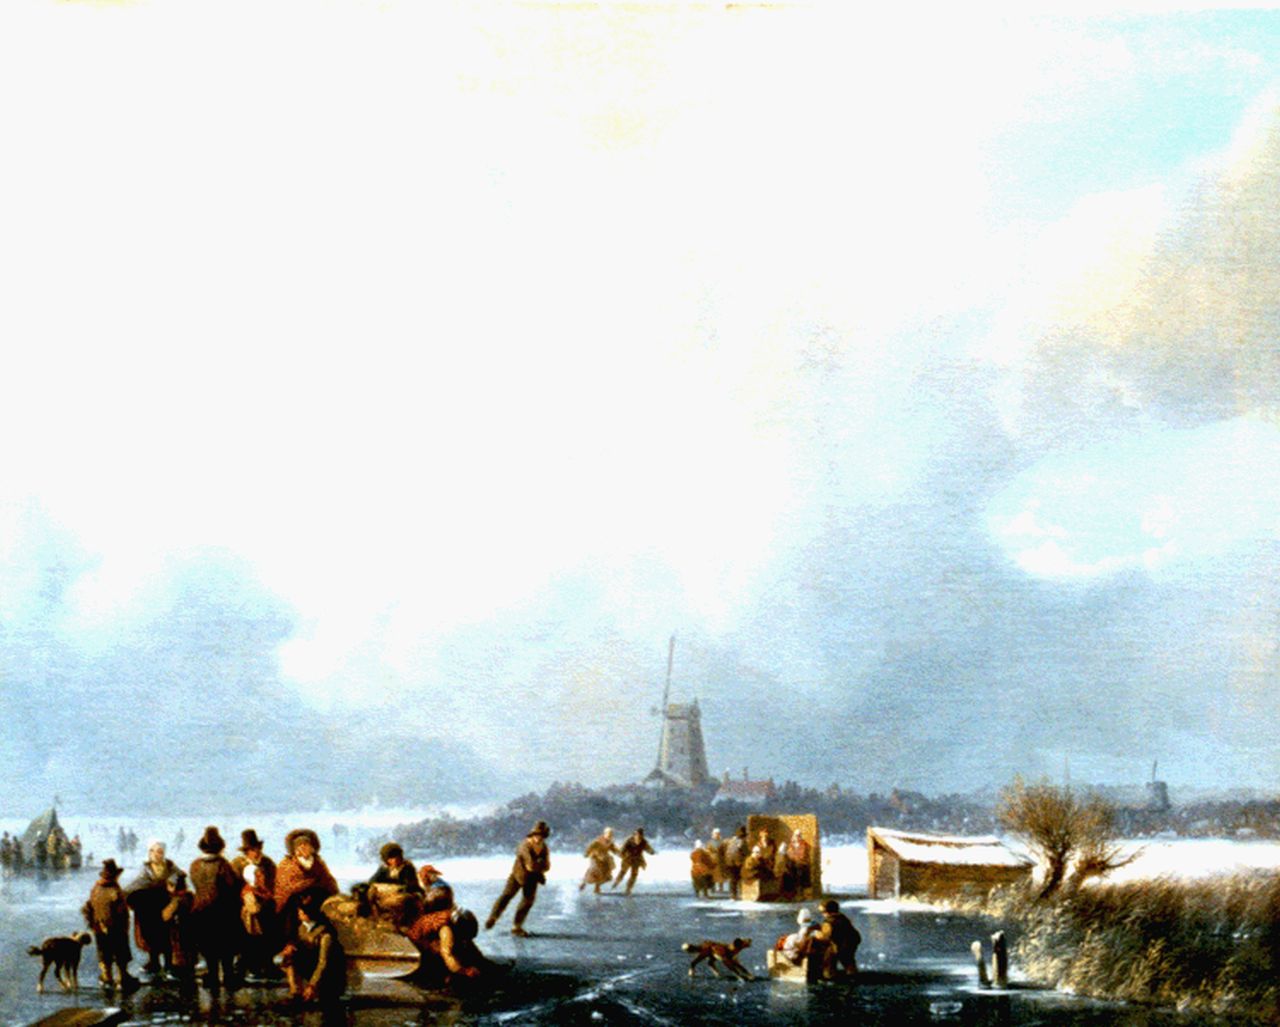 Stok J. van der | Jacobus van der Stok, Skaters and a 'koek en zopie' on a frozen waterway, Öl auf Leinwand 48,0 x 60,0 cm